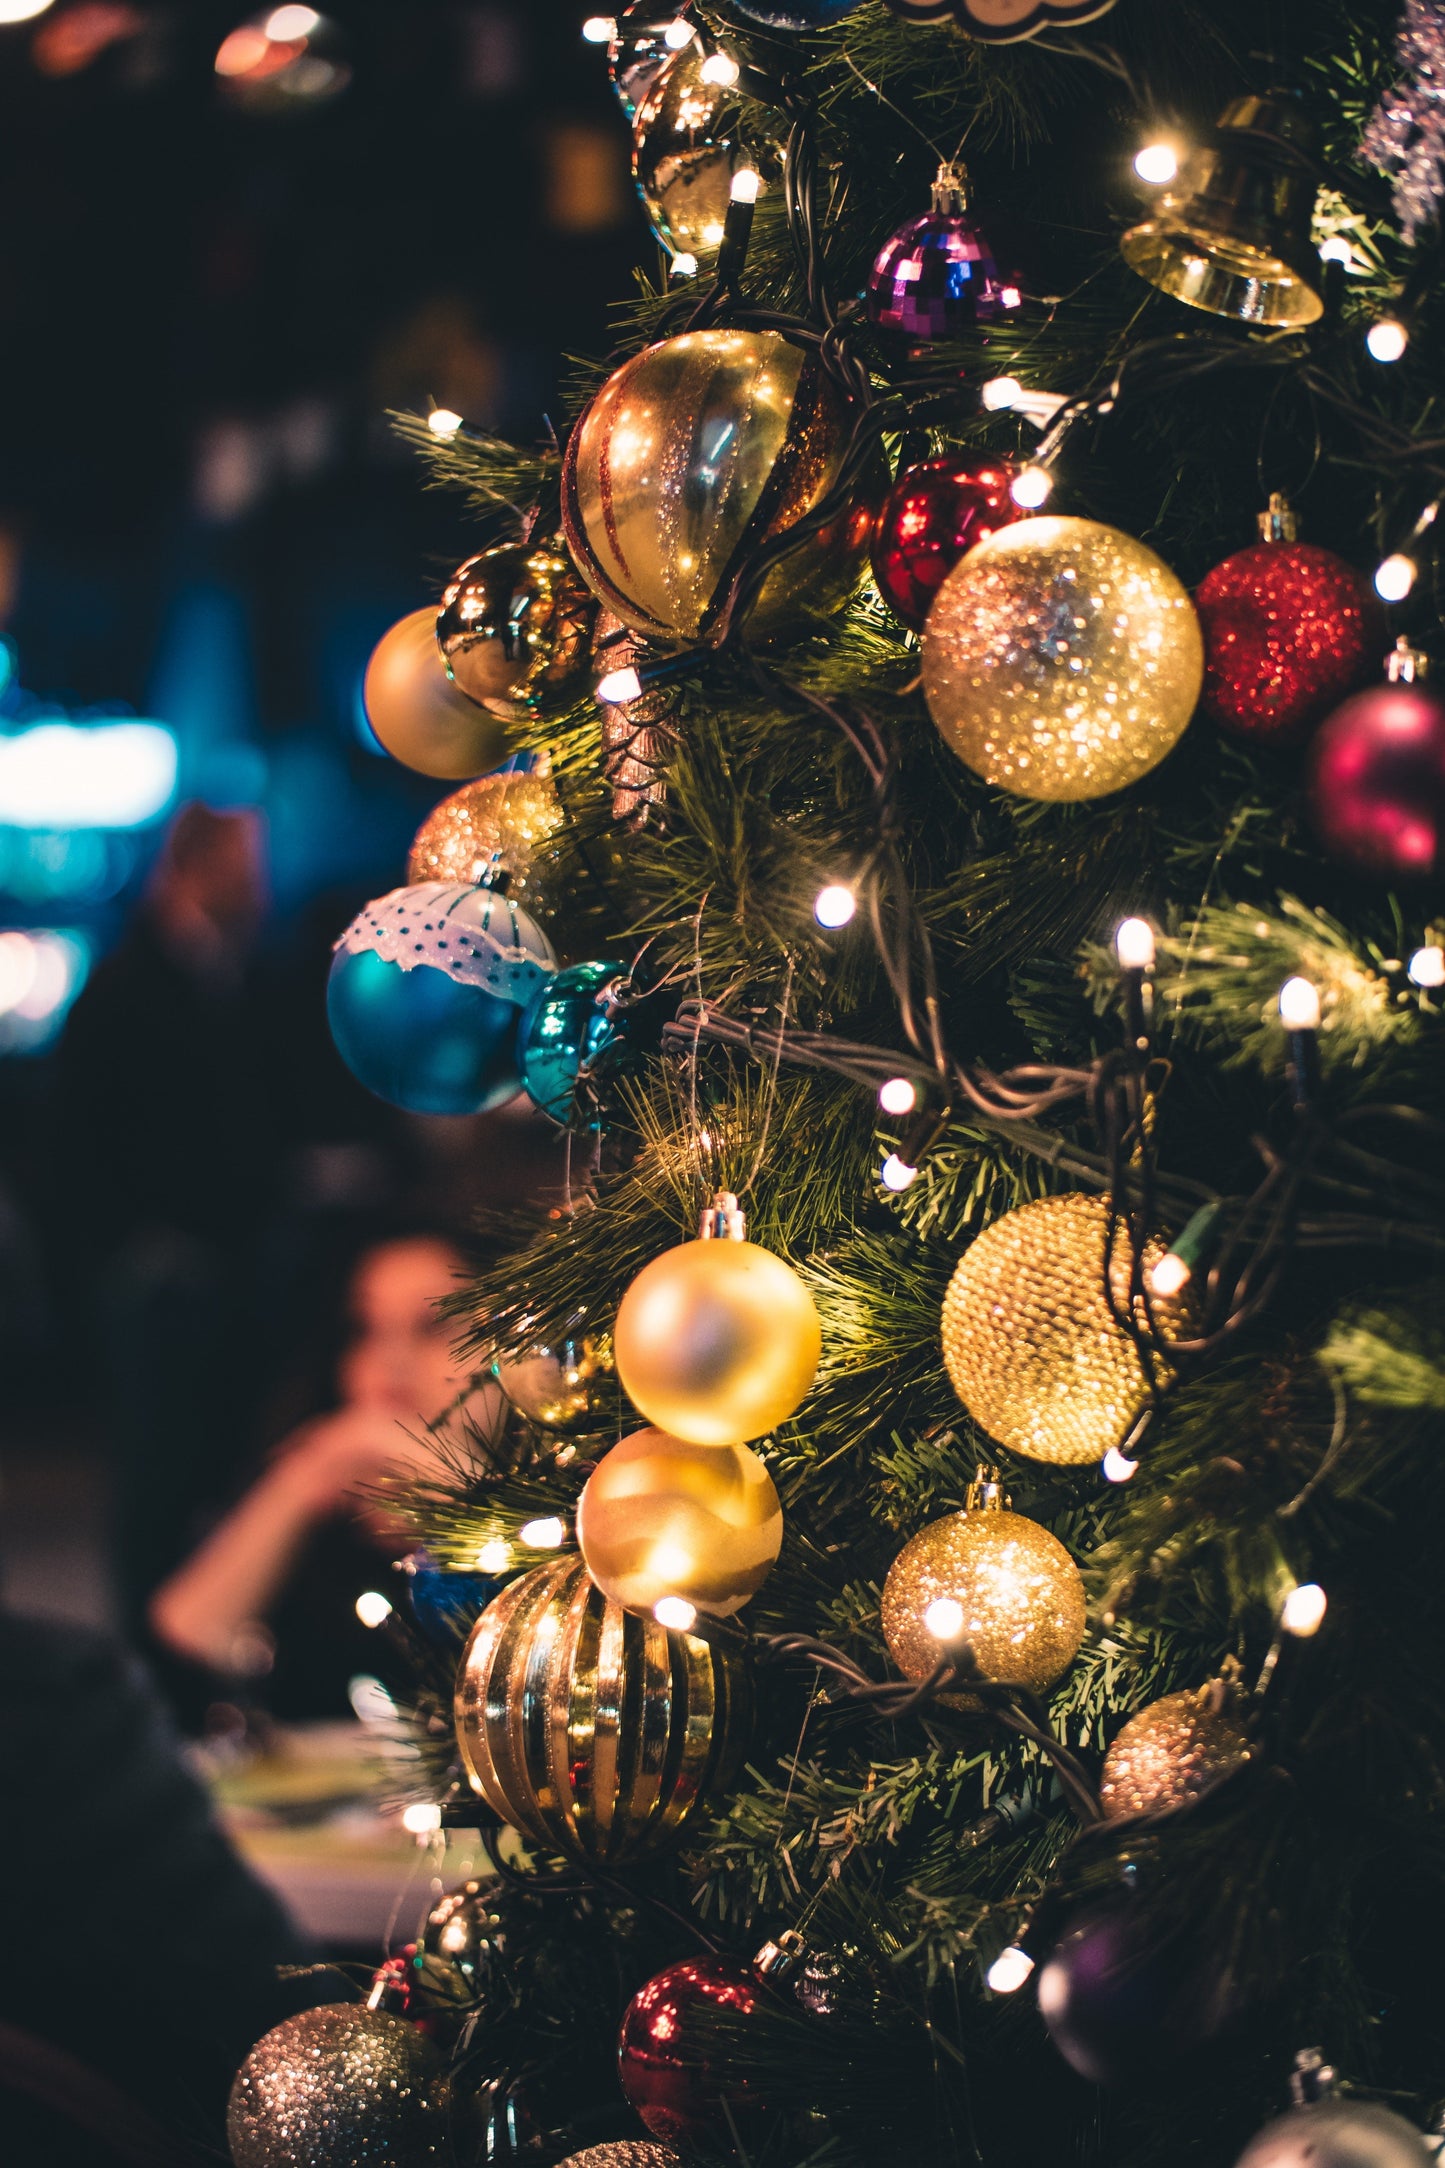 25 X Christmas Tinsel Thick Xmas Garland Tree Decorations - Royal Blue